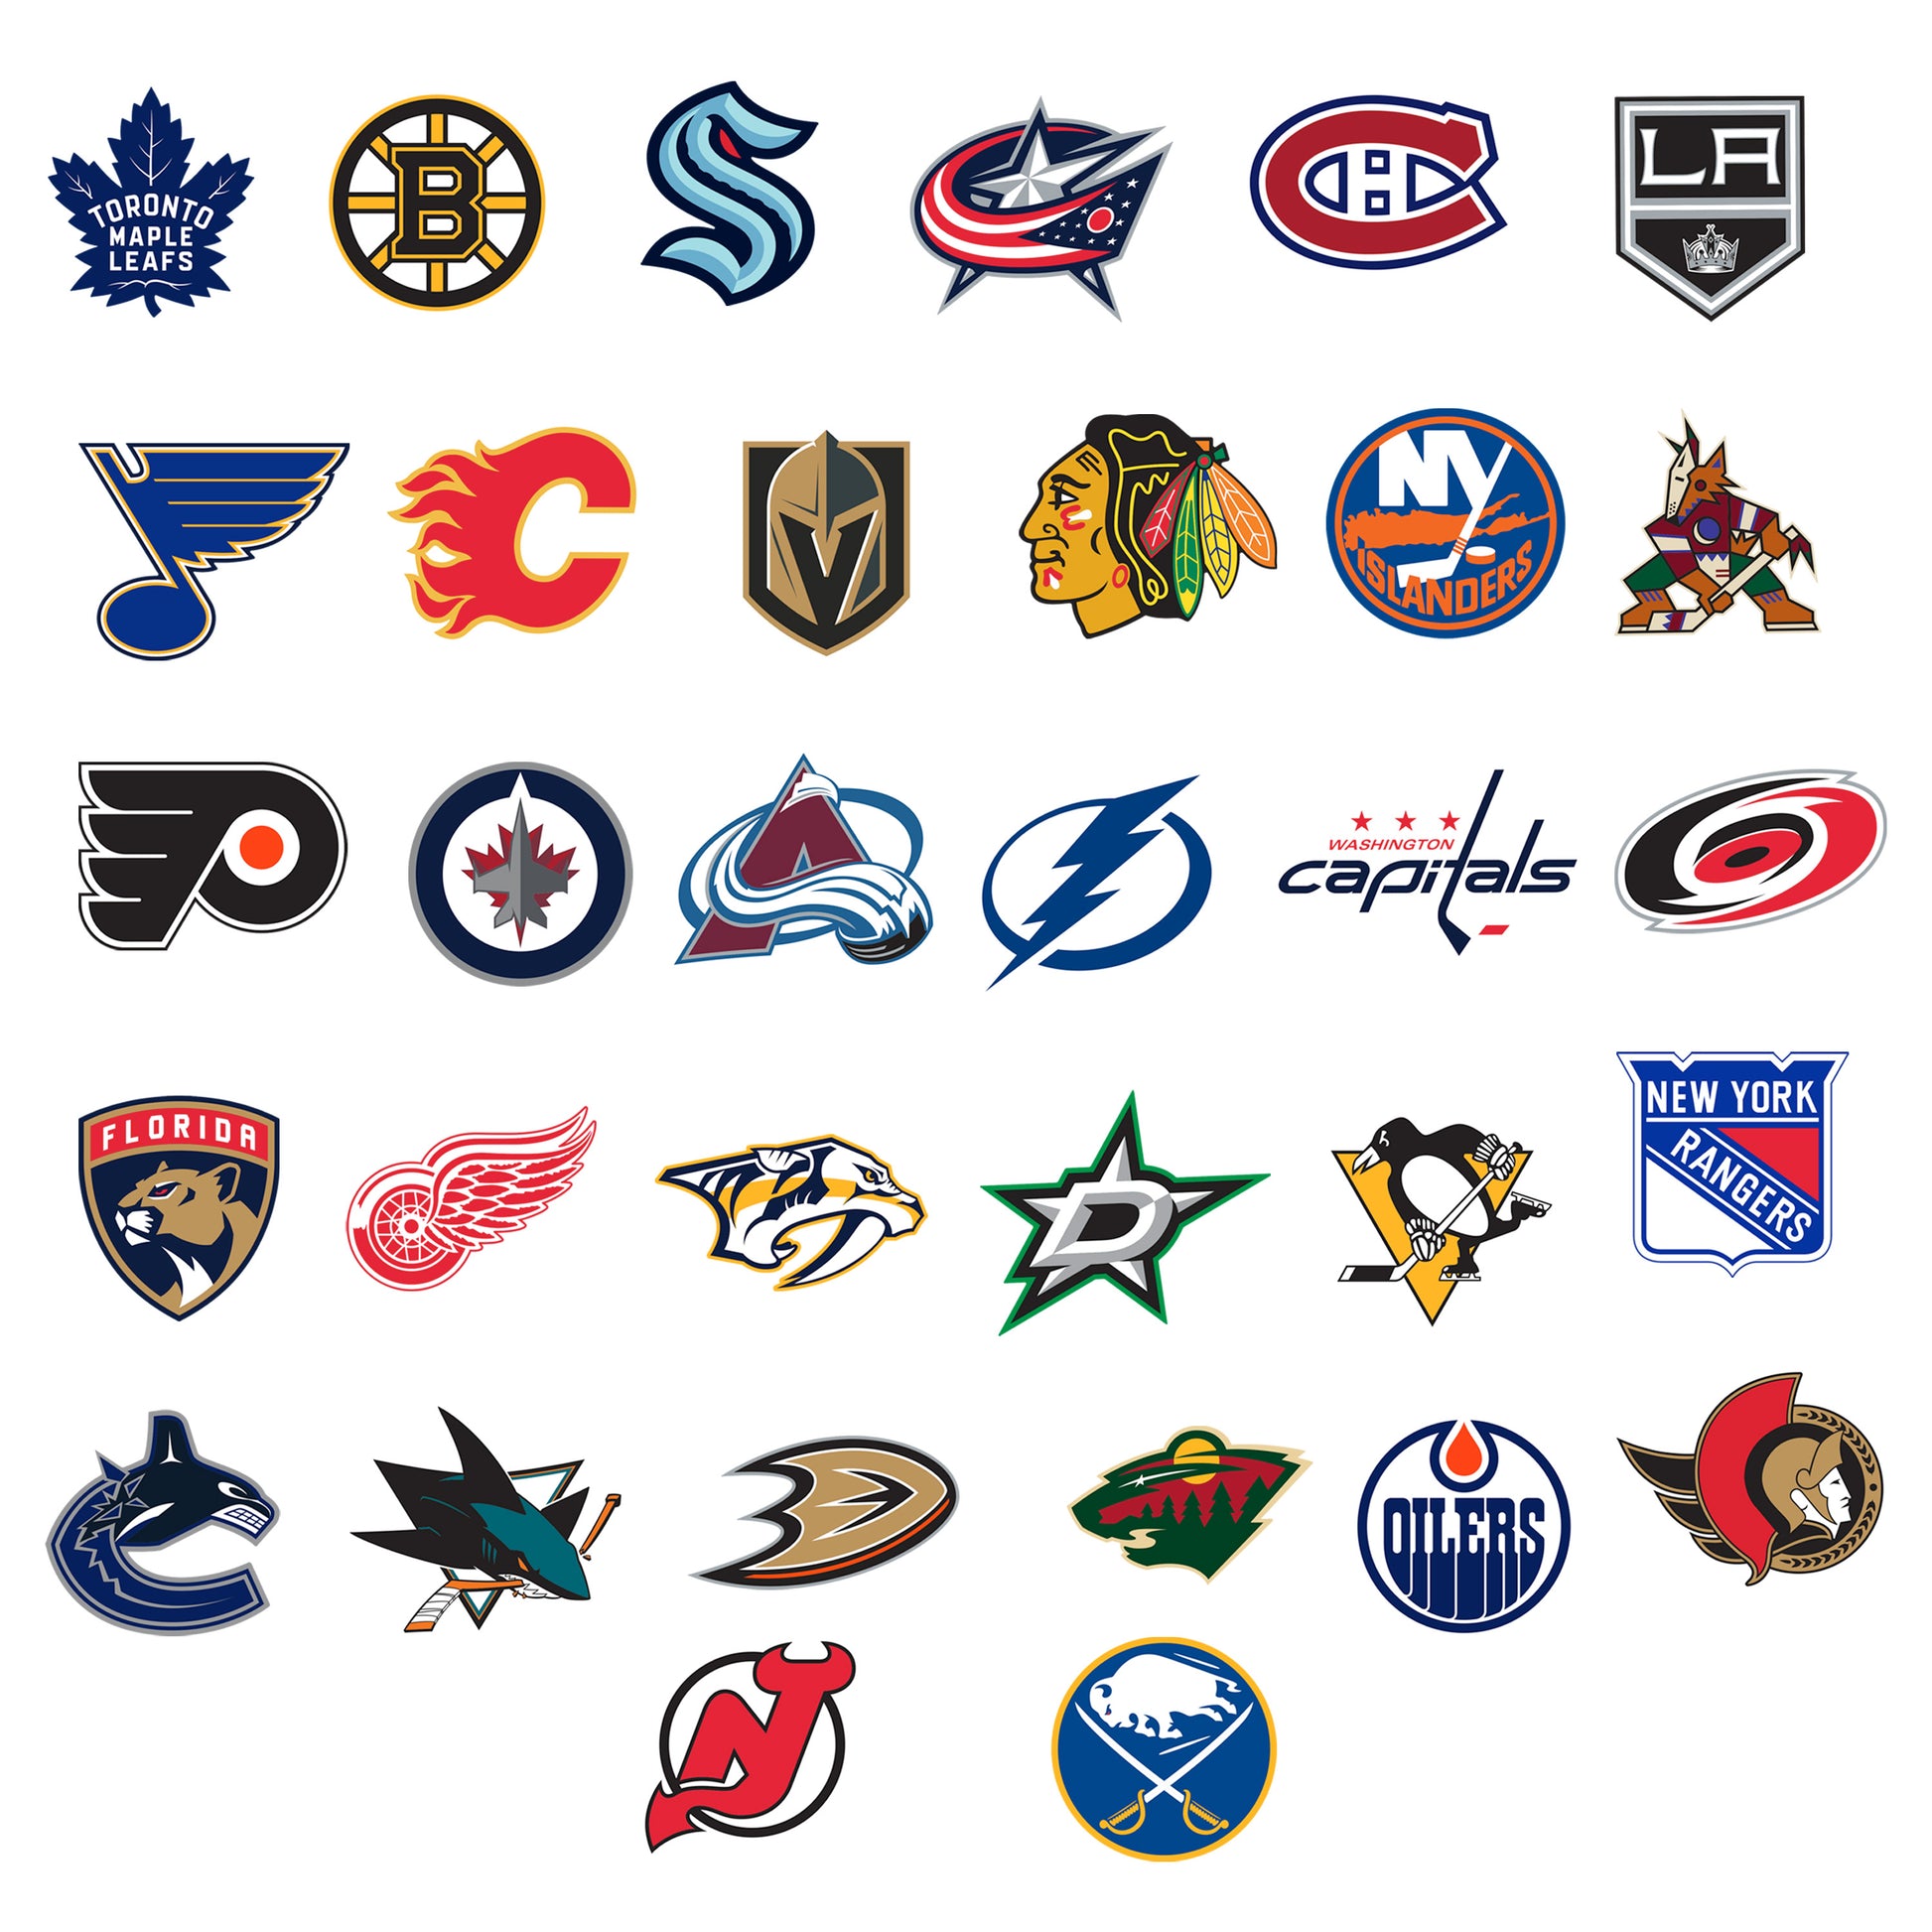 new sports logos 2022